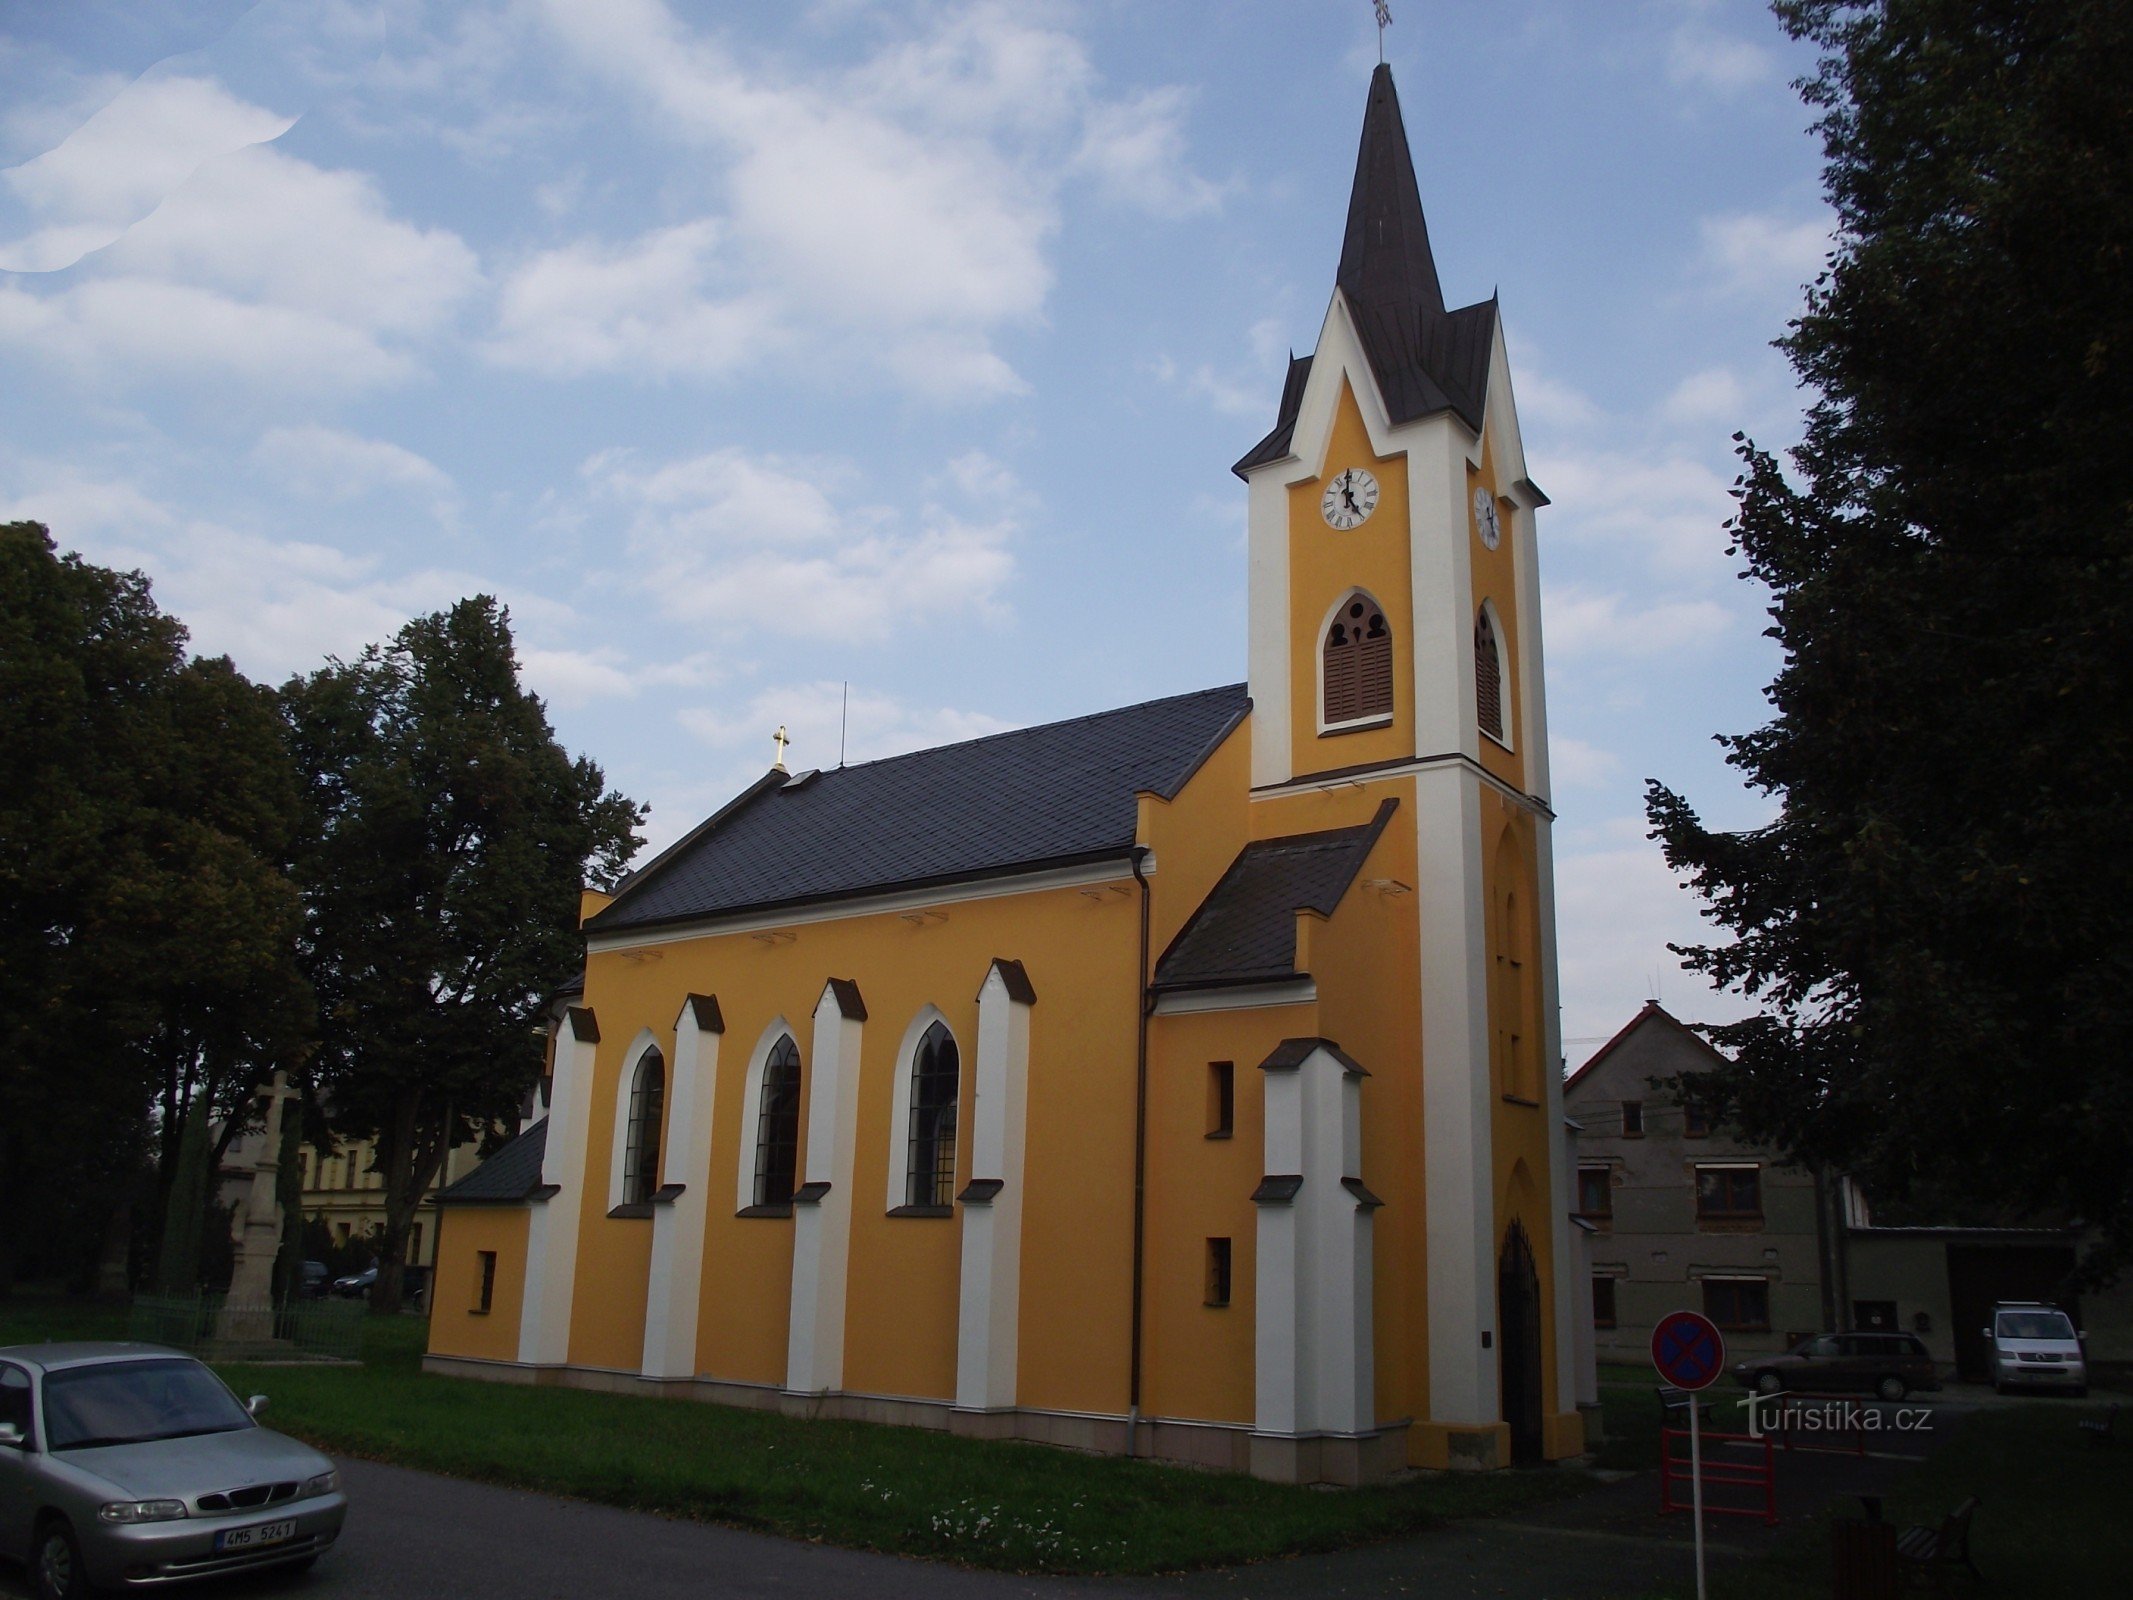 Želechovice (perto de Uničov) - capela de St. Cirilo e Metódio